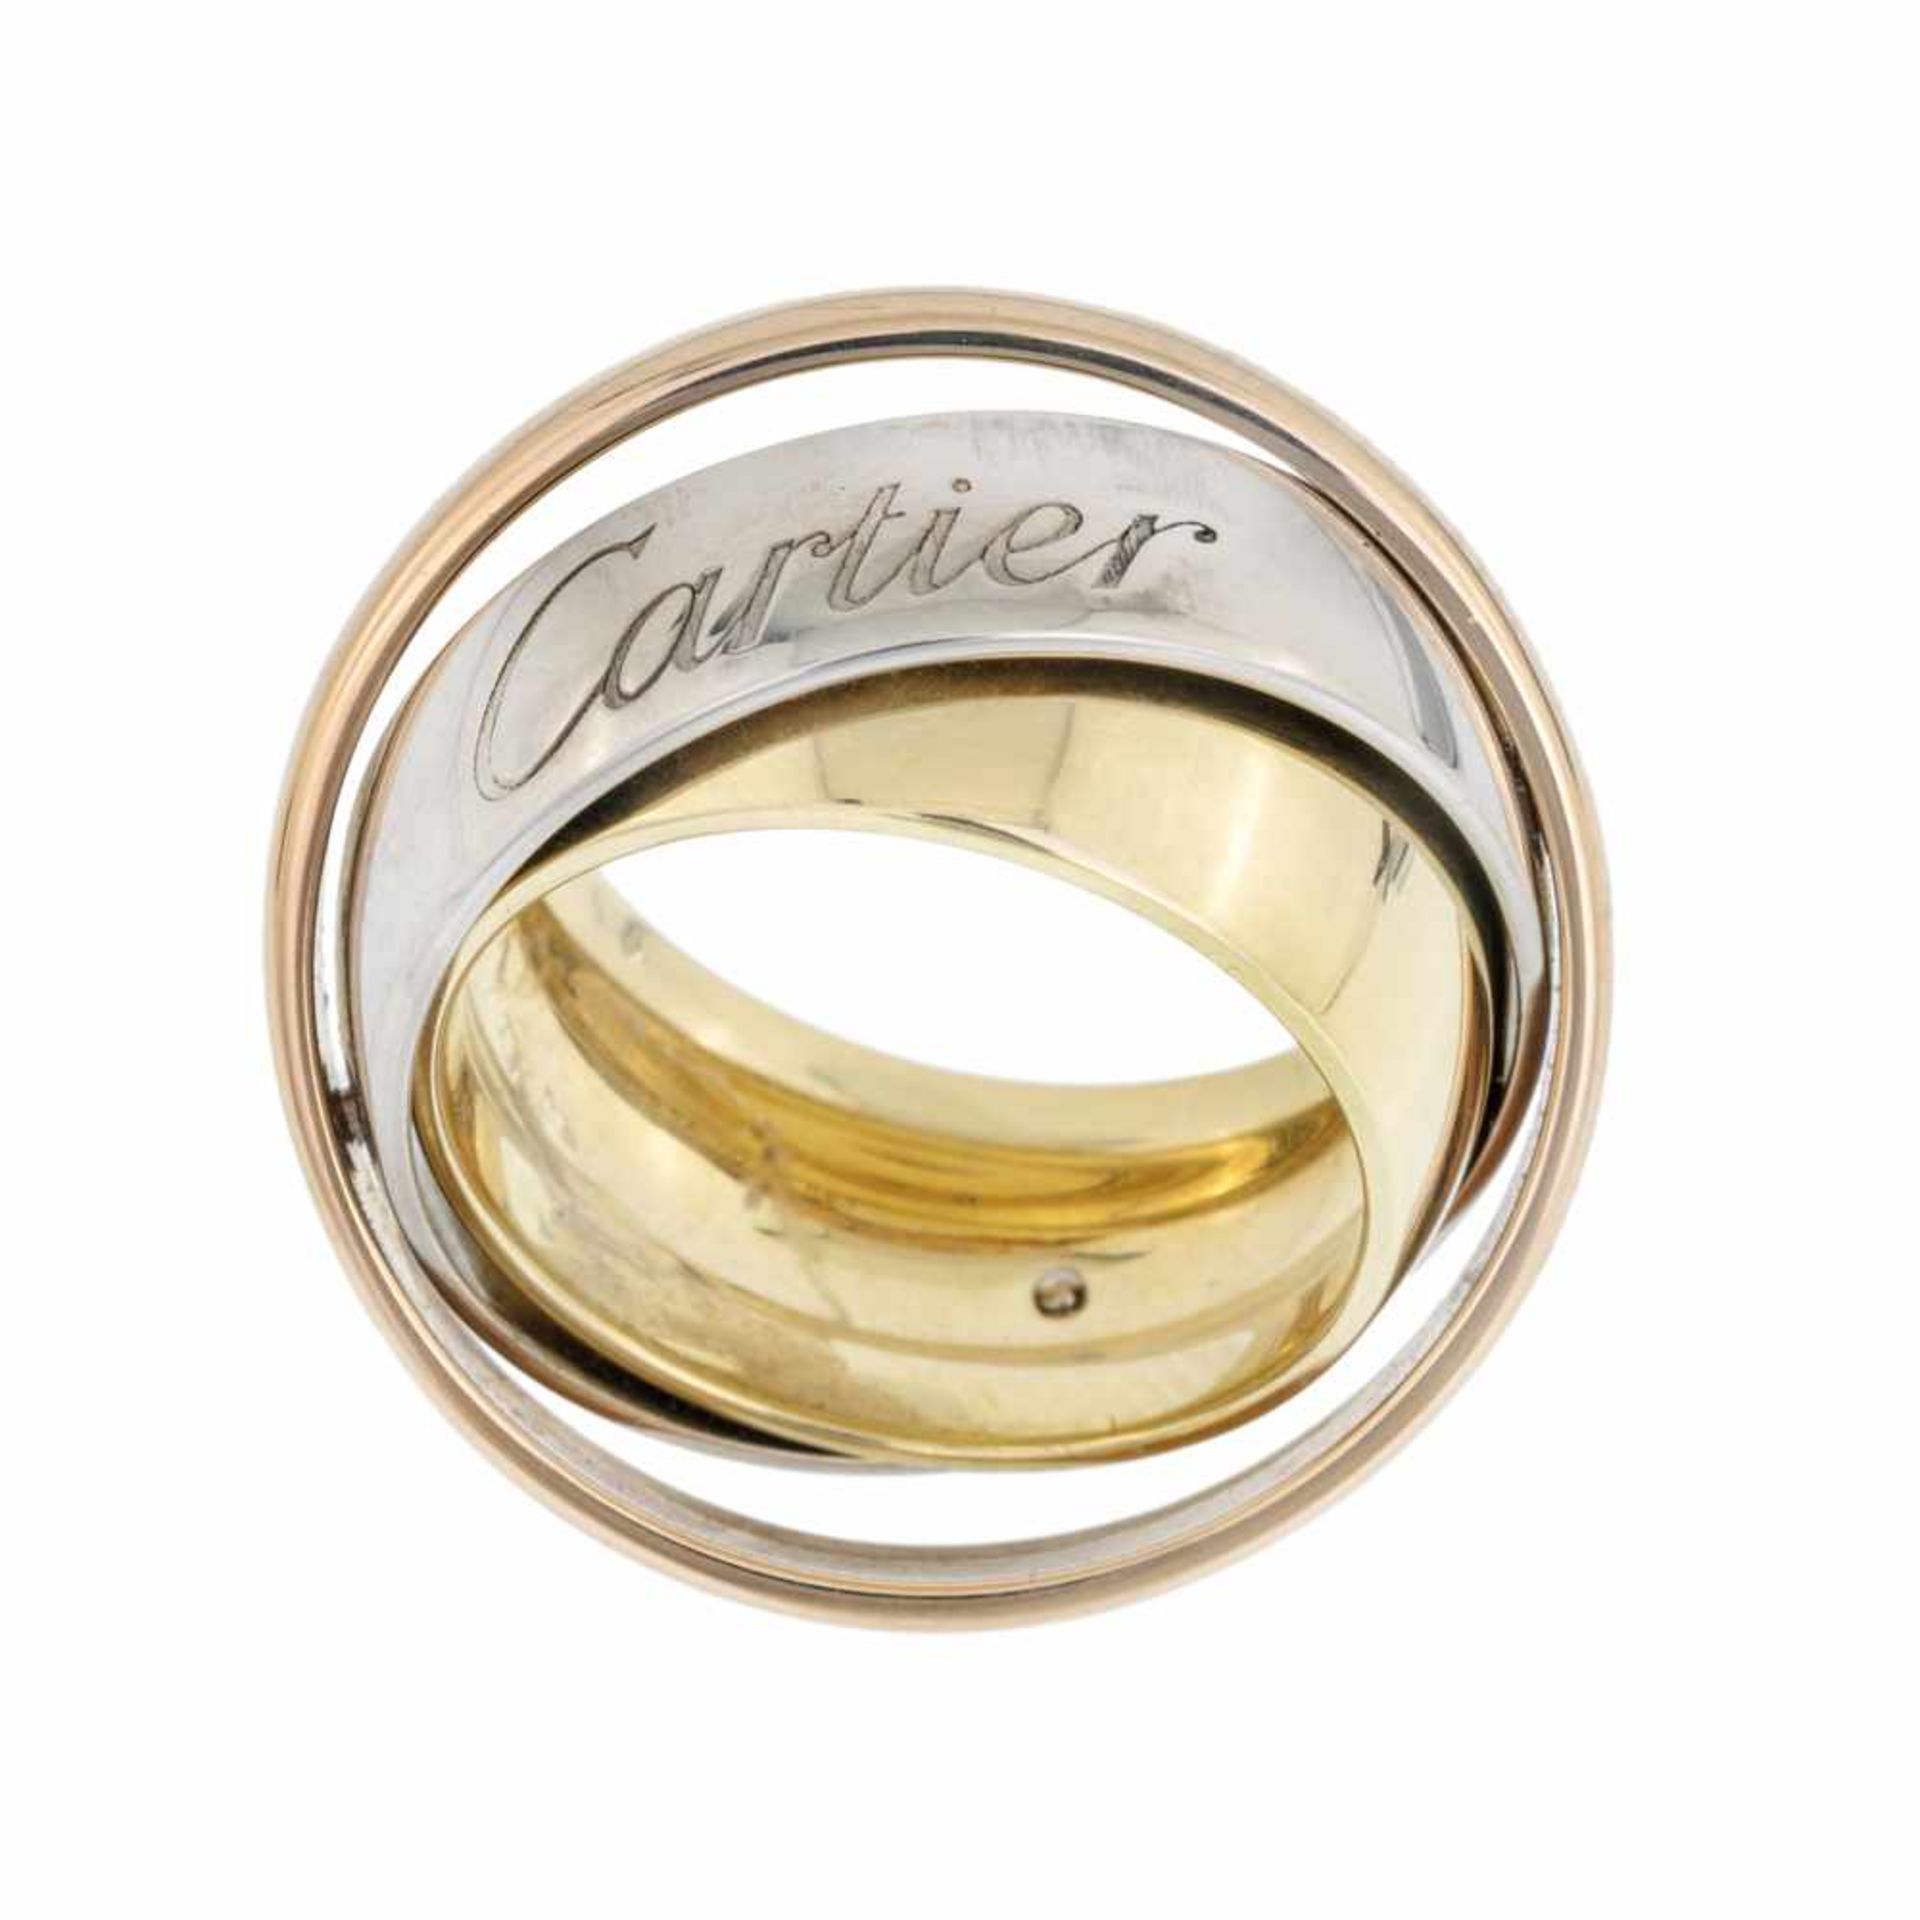 CARTIER, FEDE TRE COLORI| CARTIER WDDING RING Cartier, fede in oro tre colori. | Cartier wedding